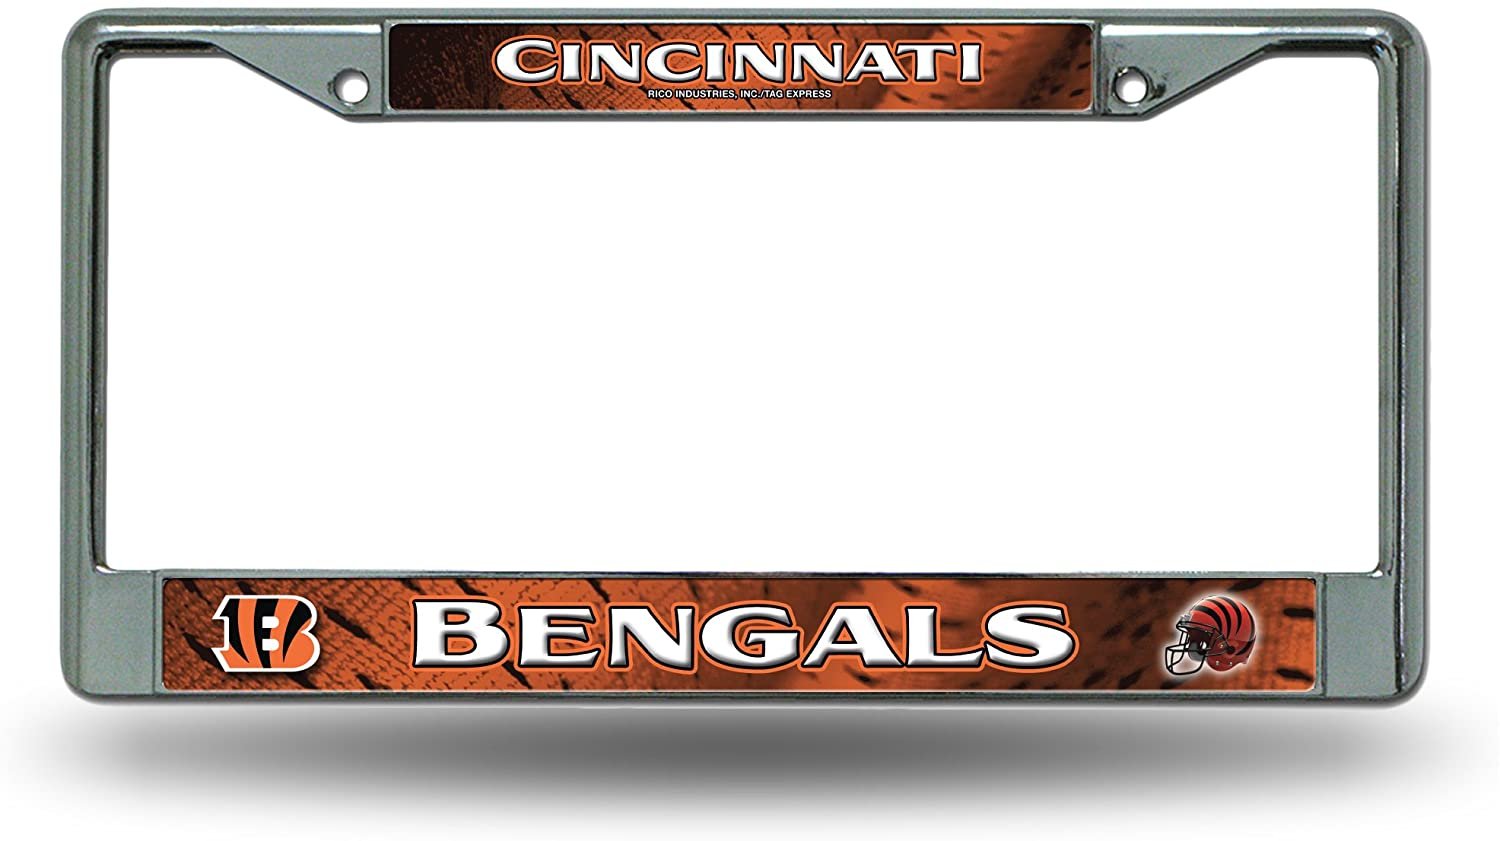 Cincinnati Bengals Premium Metal License Plate Frame Chrome Tag Cover, 12x6 Inch